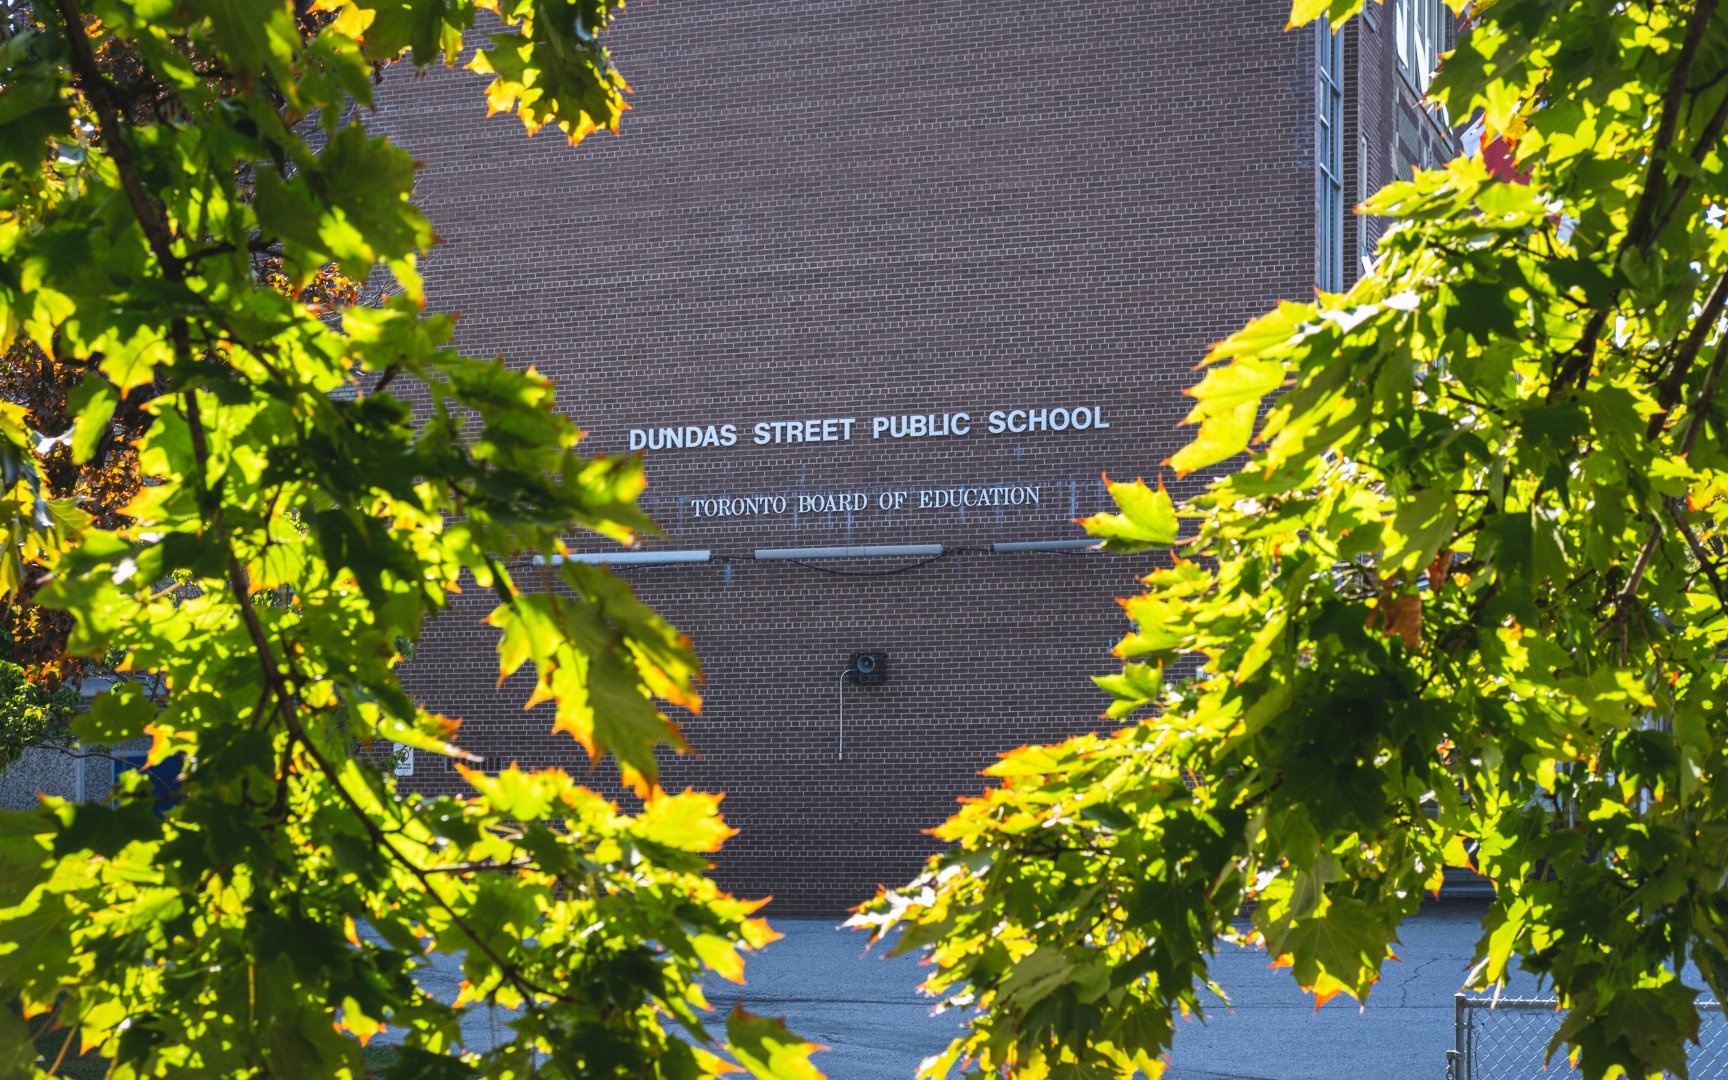 Dundas Junior Public School (c) Photos by SHANE Maps exclusively for SHANE Maps.